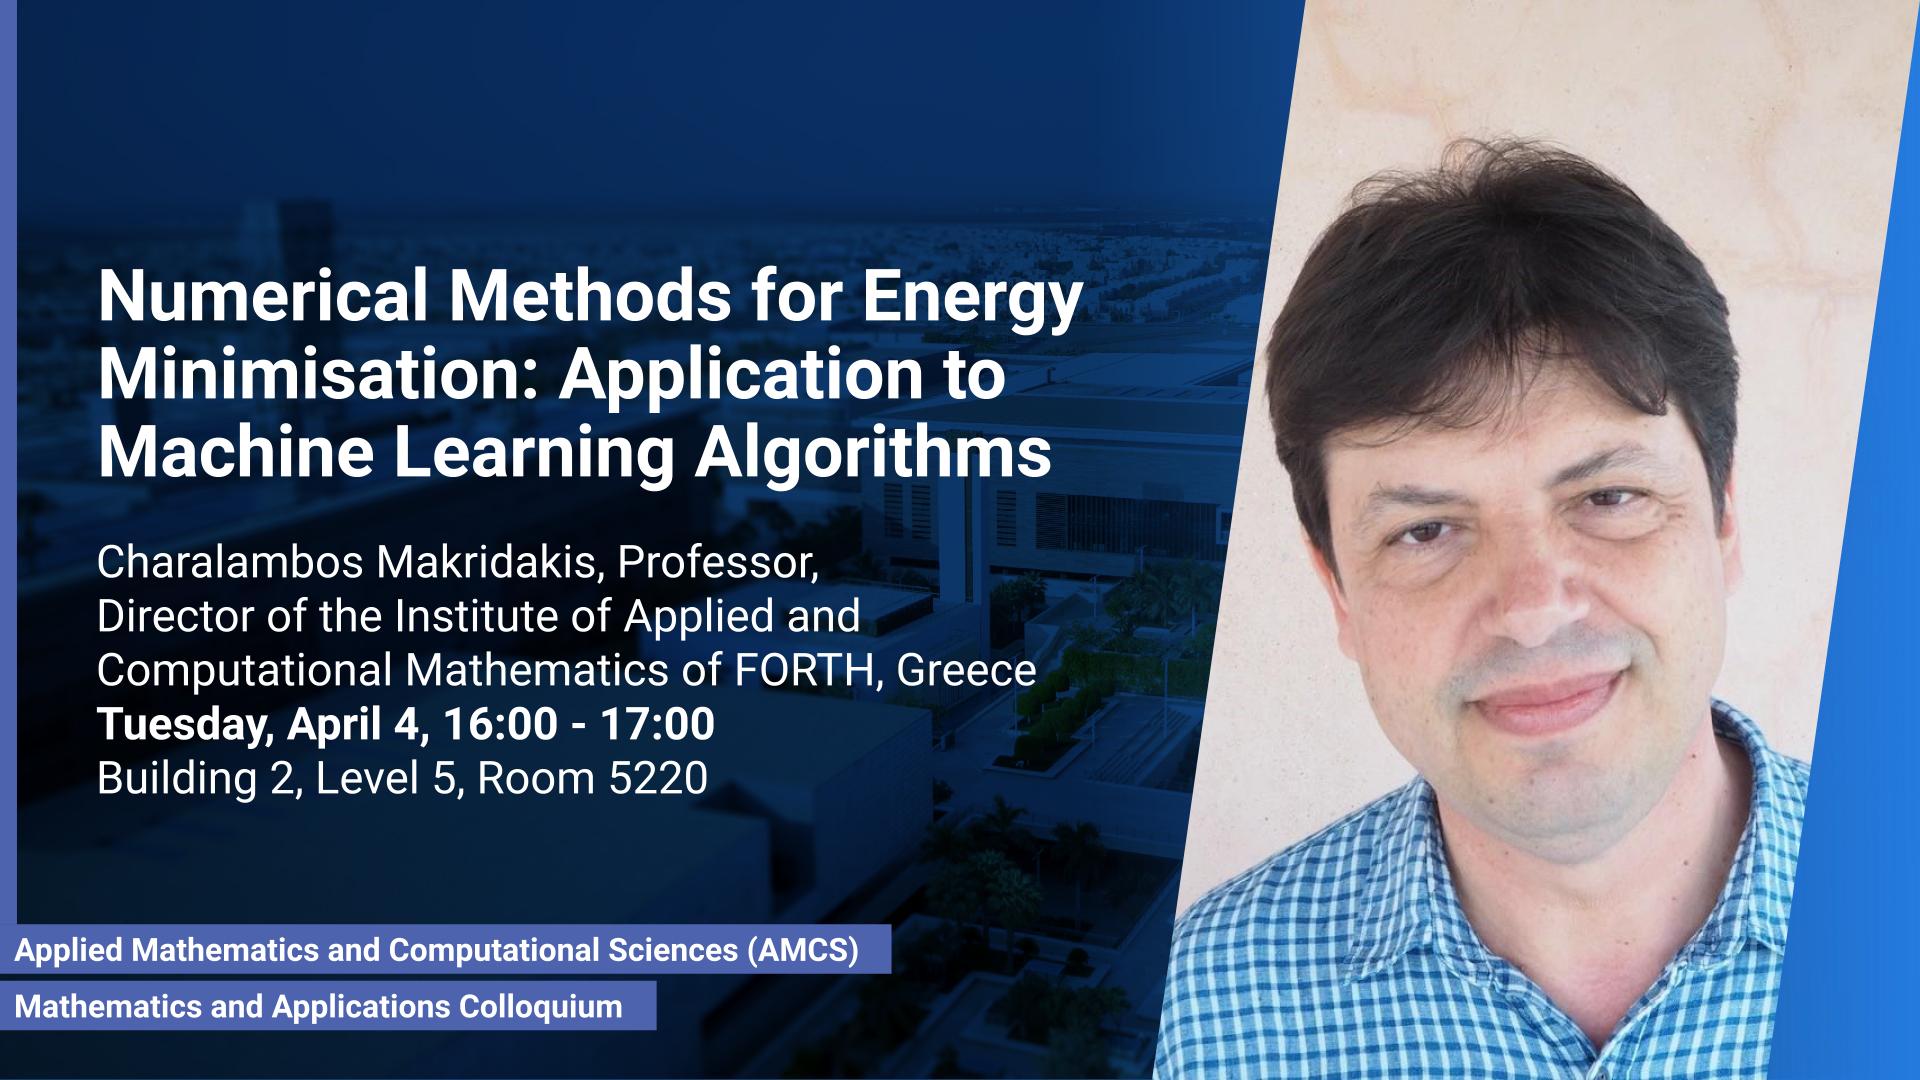 KAUST-CEMSE-AMCS-Mathematics-Application-Colloquium-Prof-Charalambos-Makridakis-Numerical-Methods-Energy-Minimisation